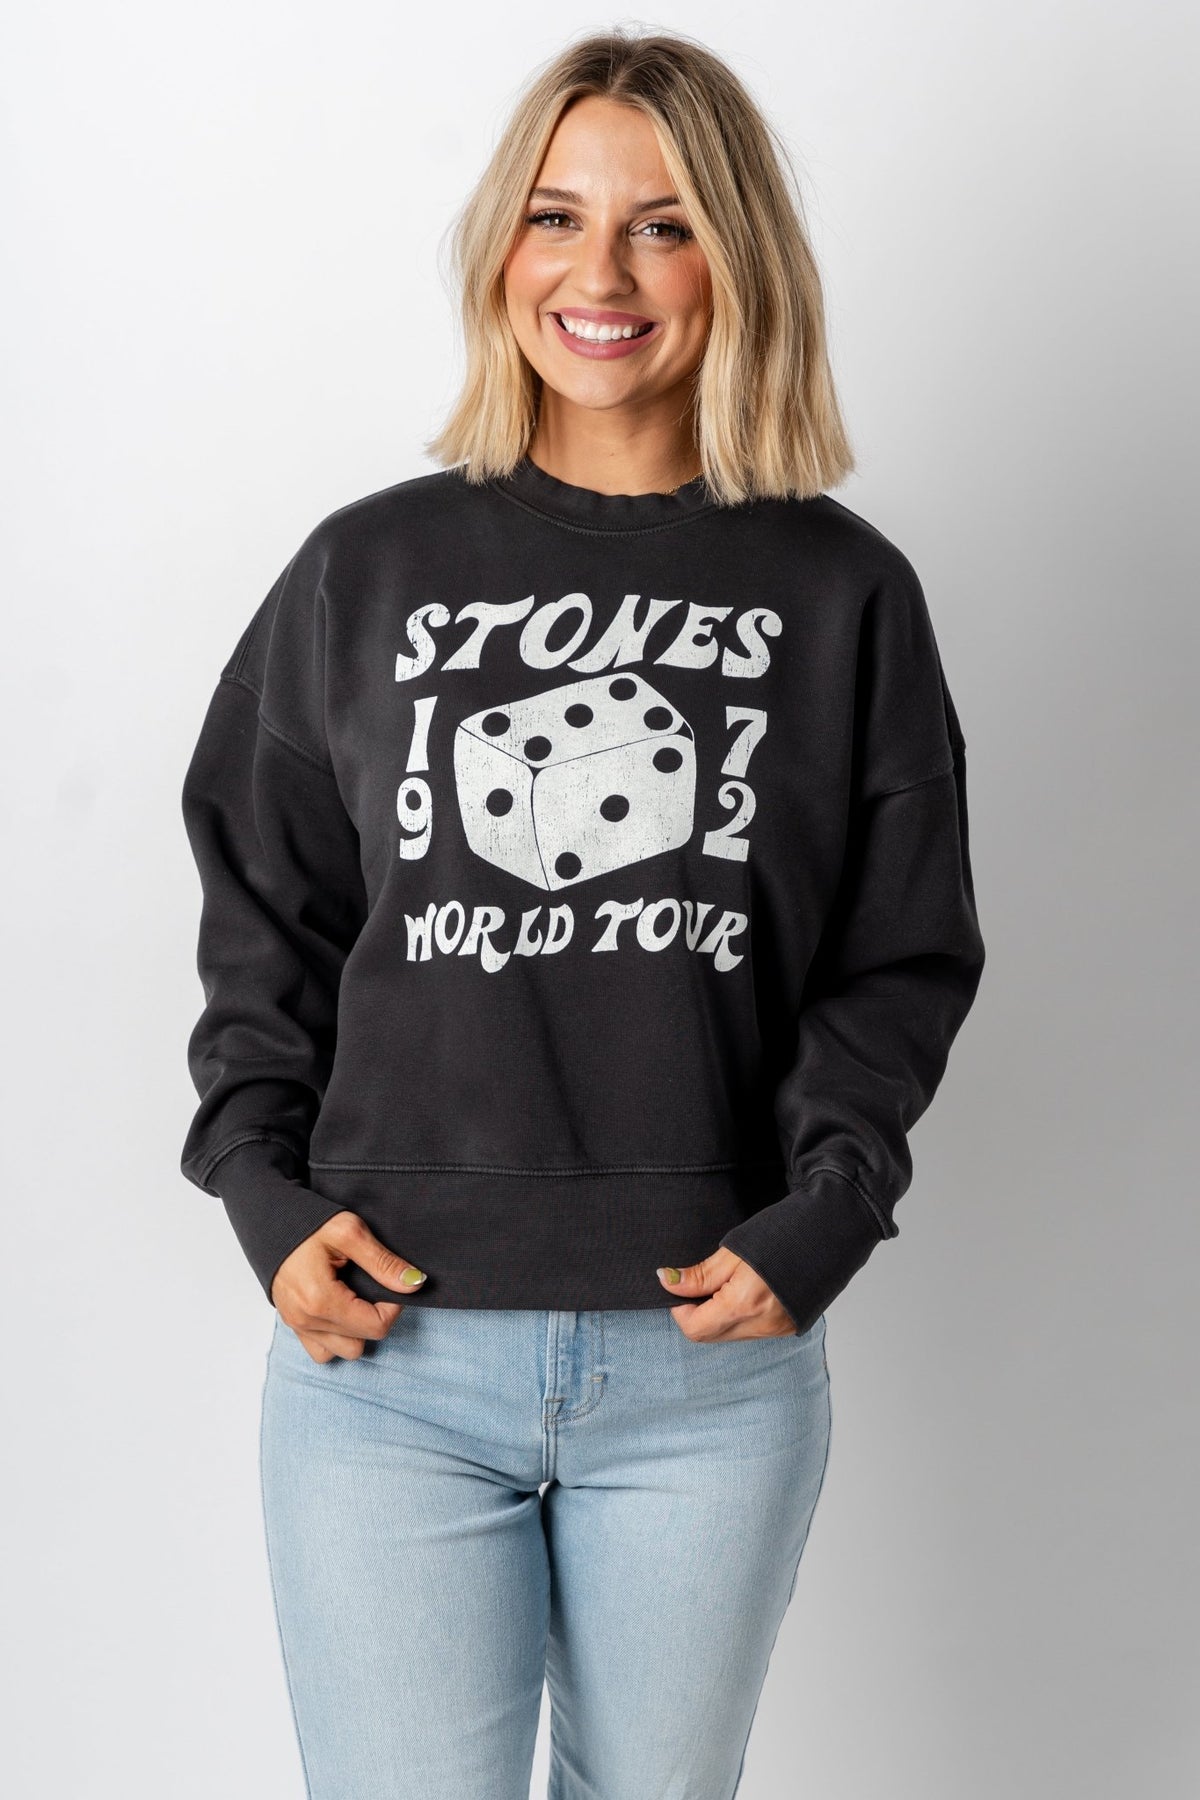 Rolling Stones dice sweatshirt smoke - Trendy Band T-Shirts and Sweatshirts at Lush Fashion Lounge Boutique in Oklahoma City